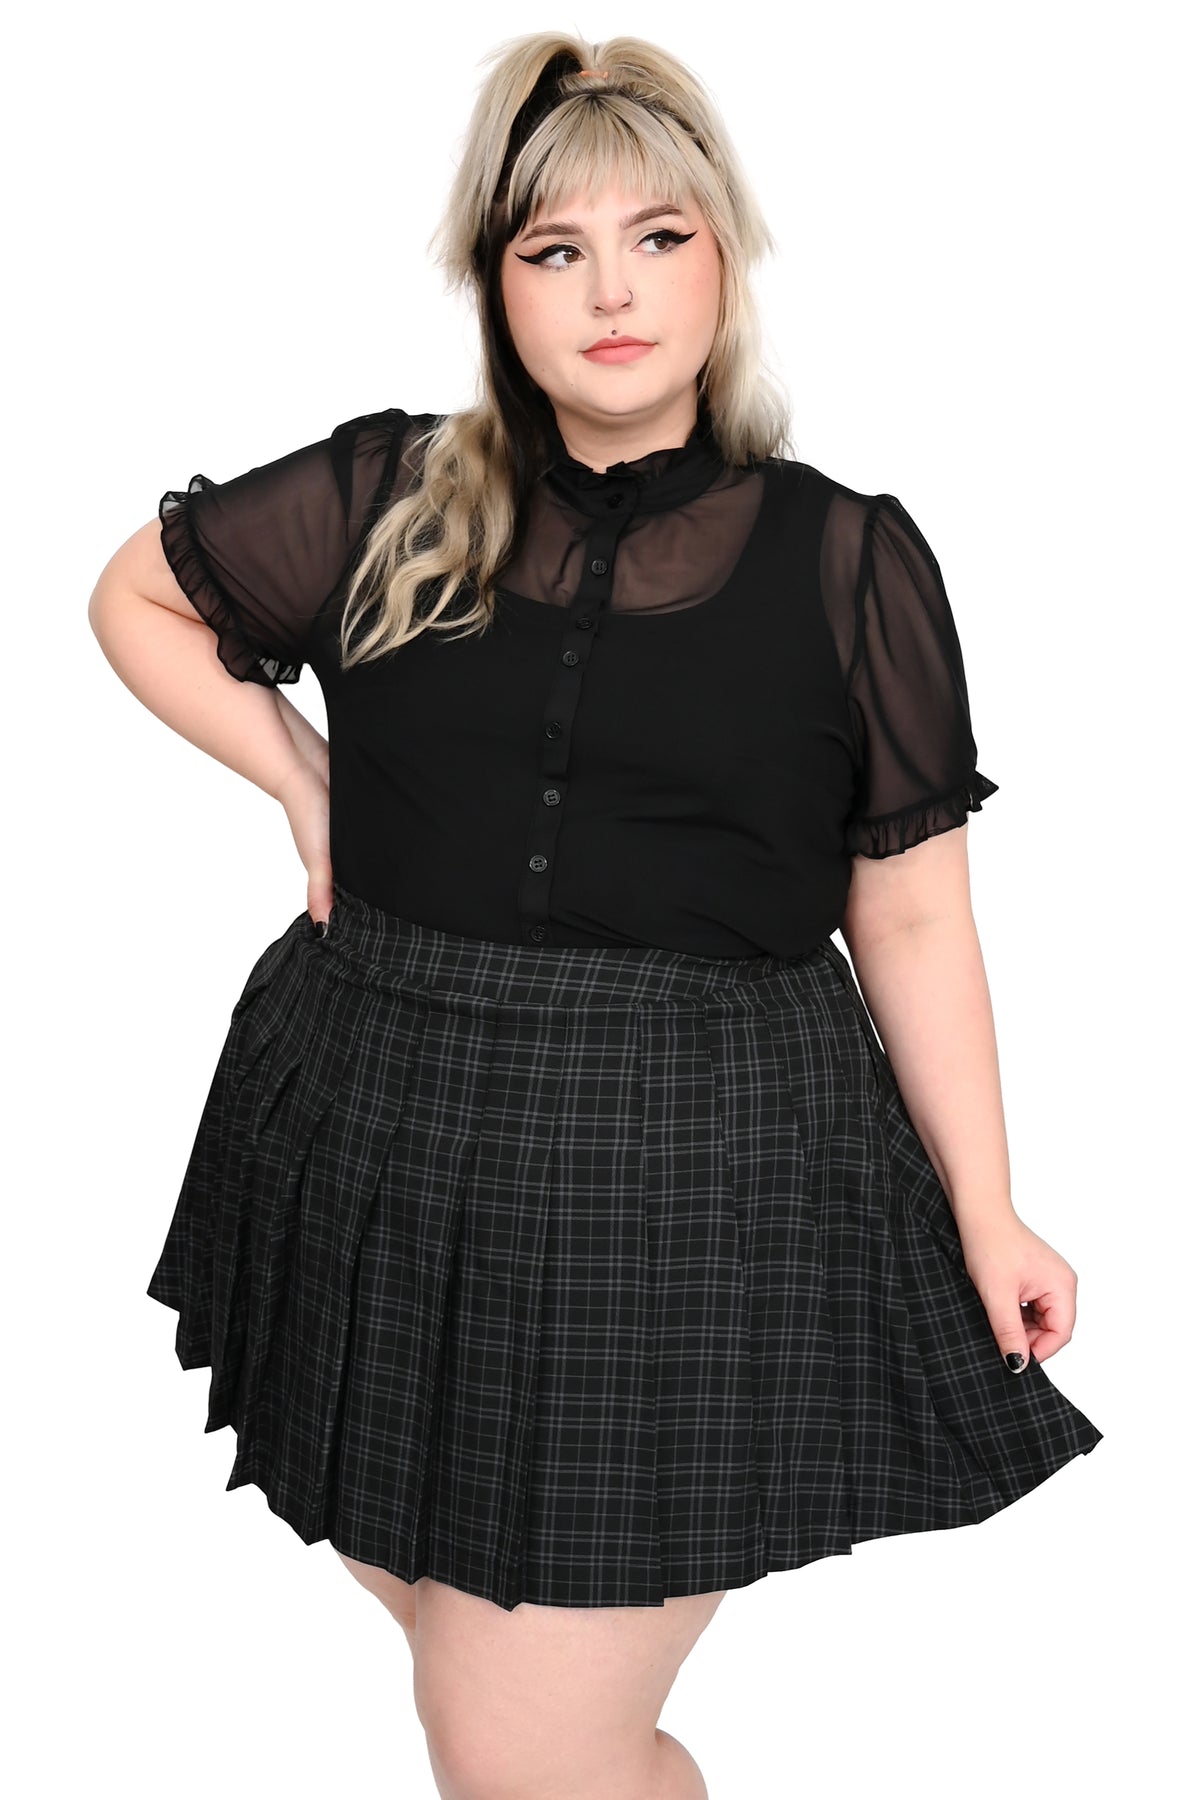 Dark Academy Pleated Skirt with Shorts - Sizes Medium left! No Restock!